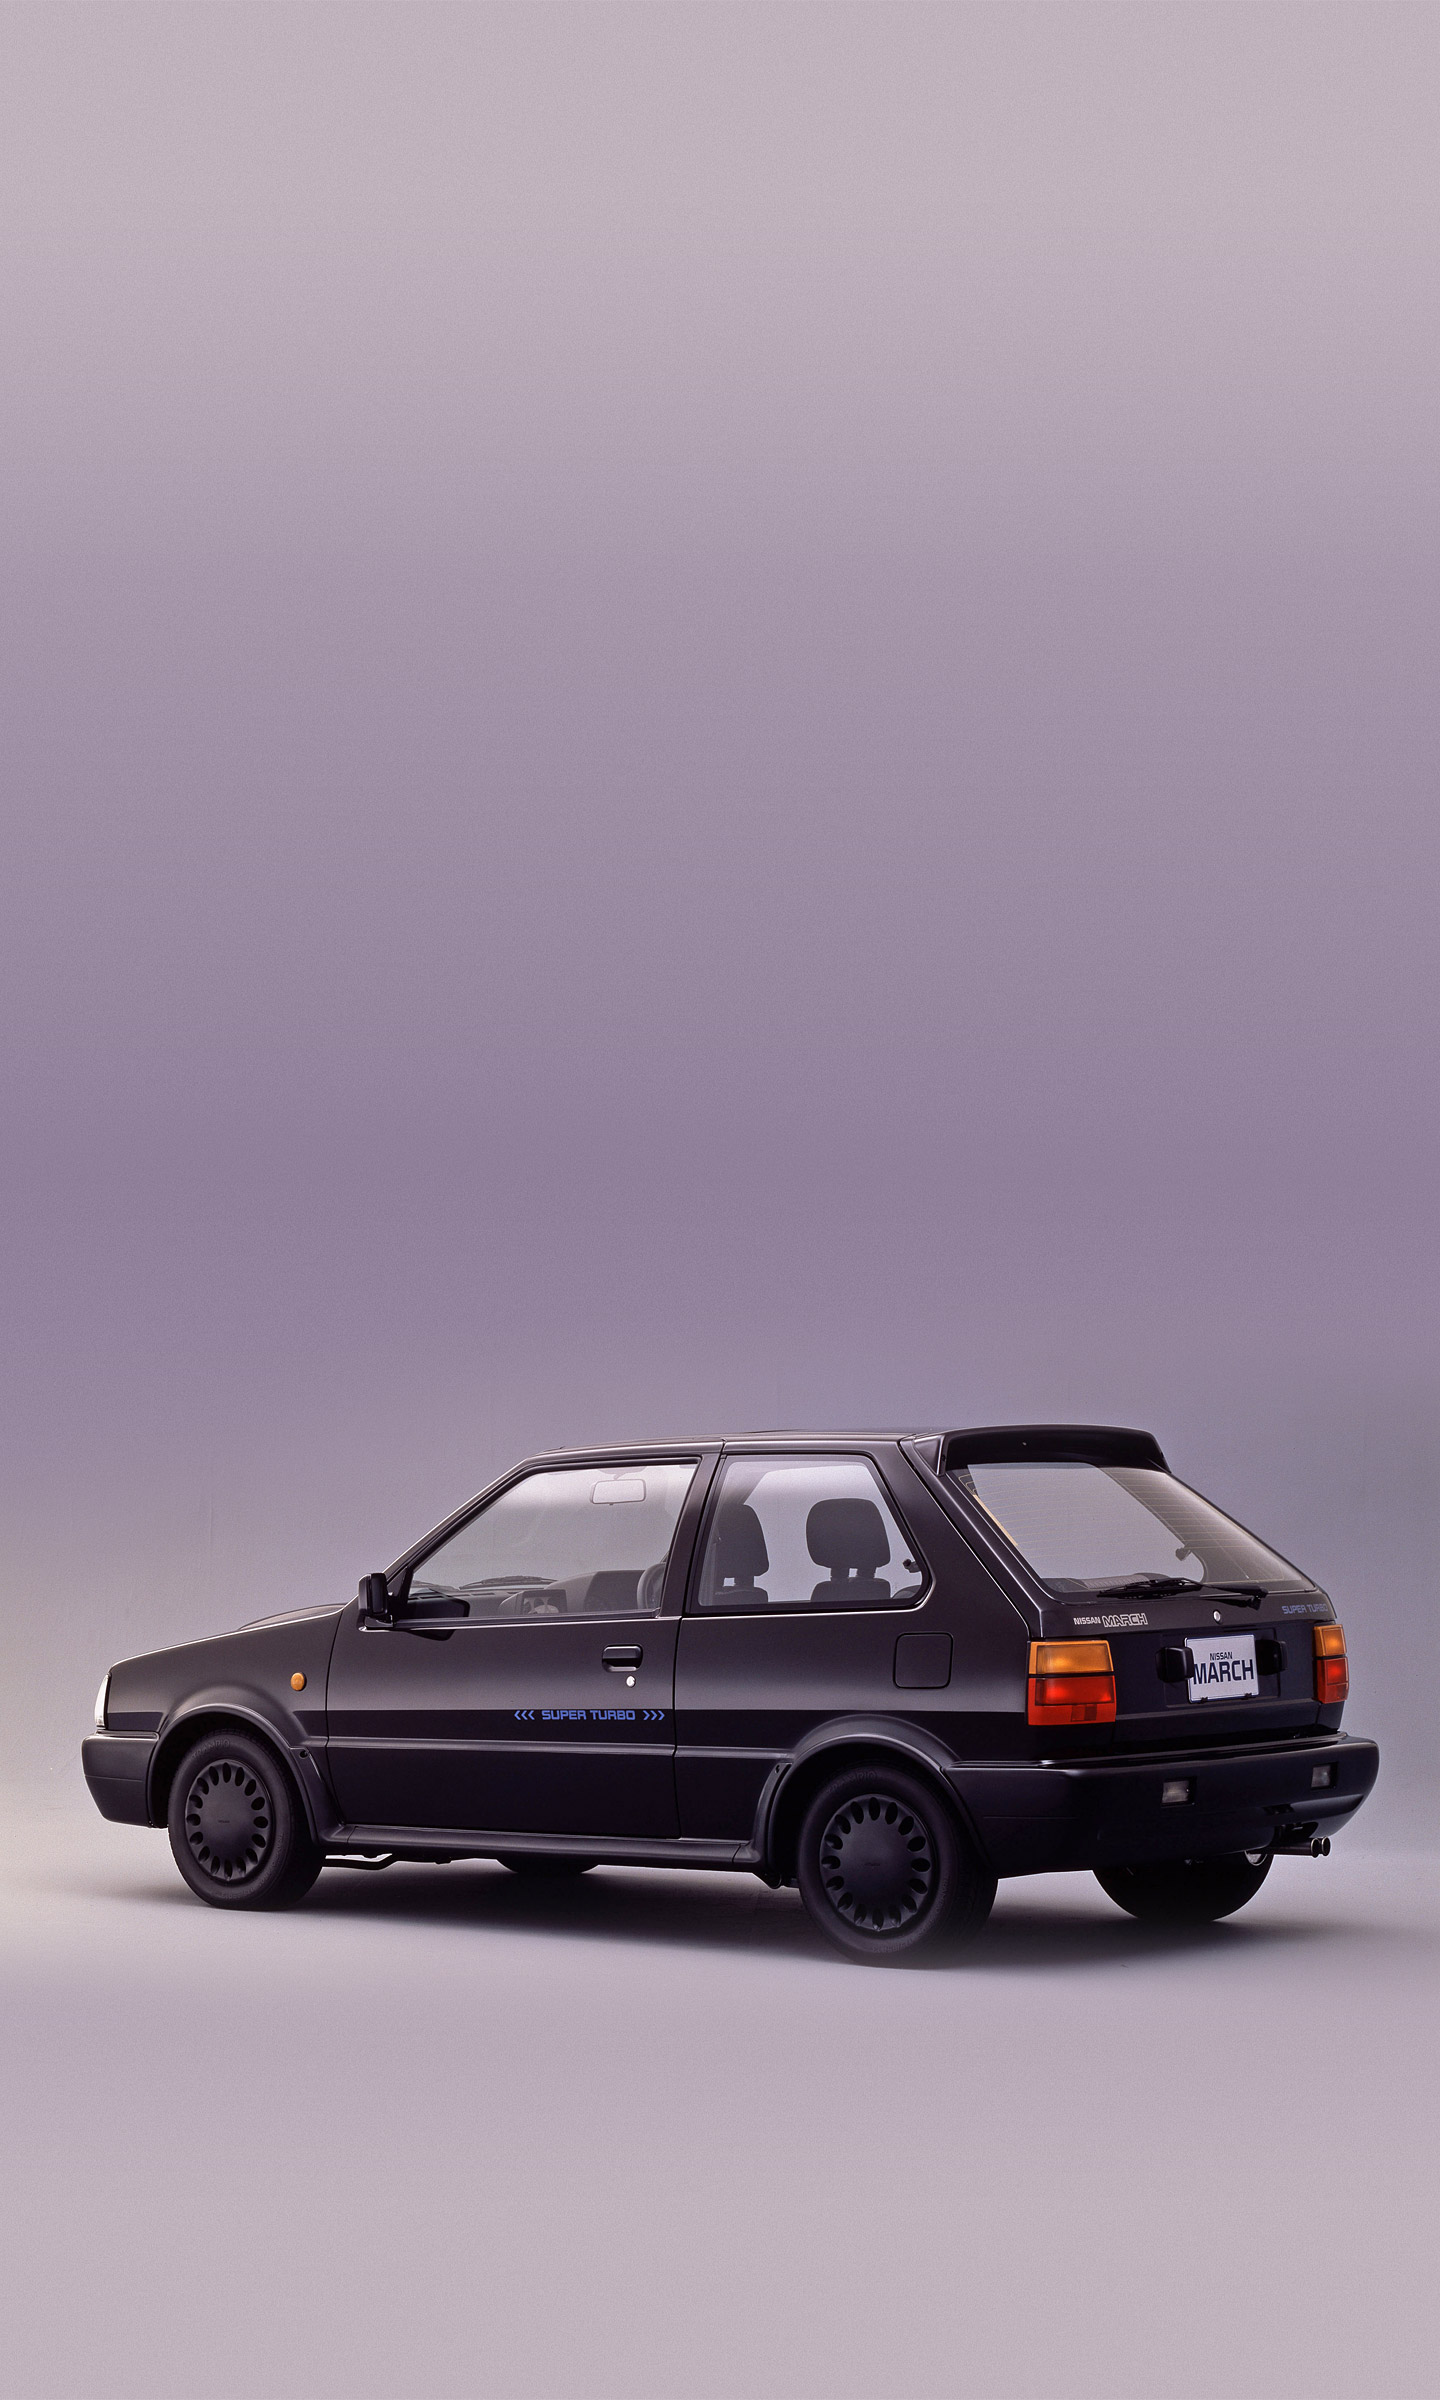  1989 Nissan March Super Turbo Wallpaper.